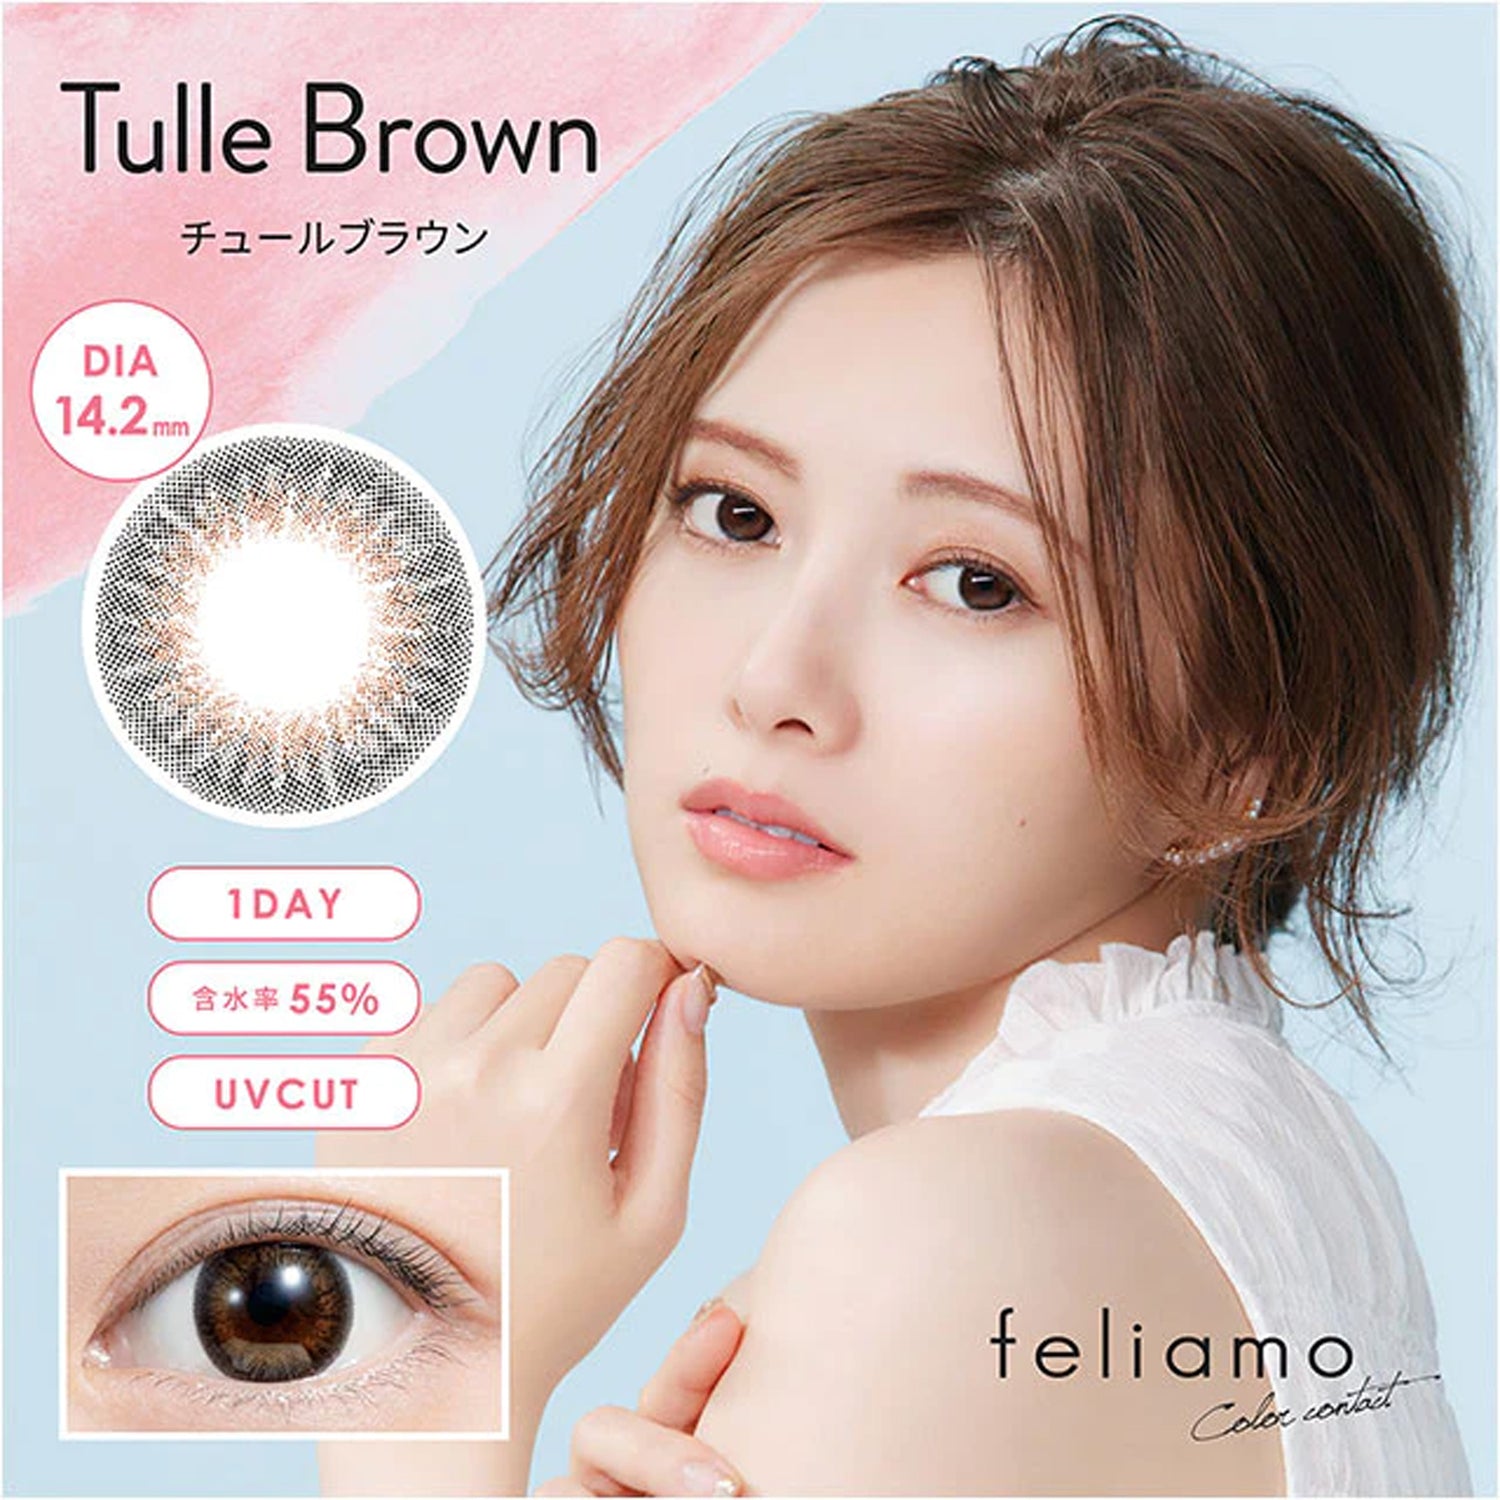 Feliamo Daily Contact Lenses-Tulle Brown 10lenses